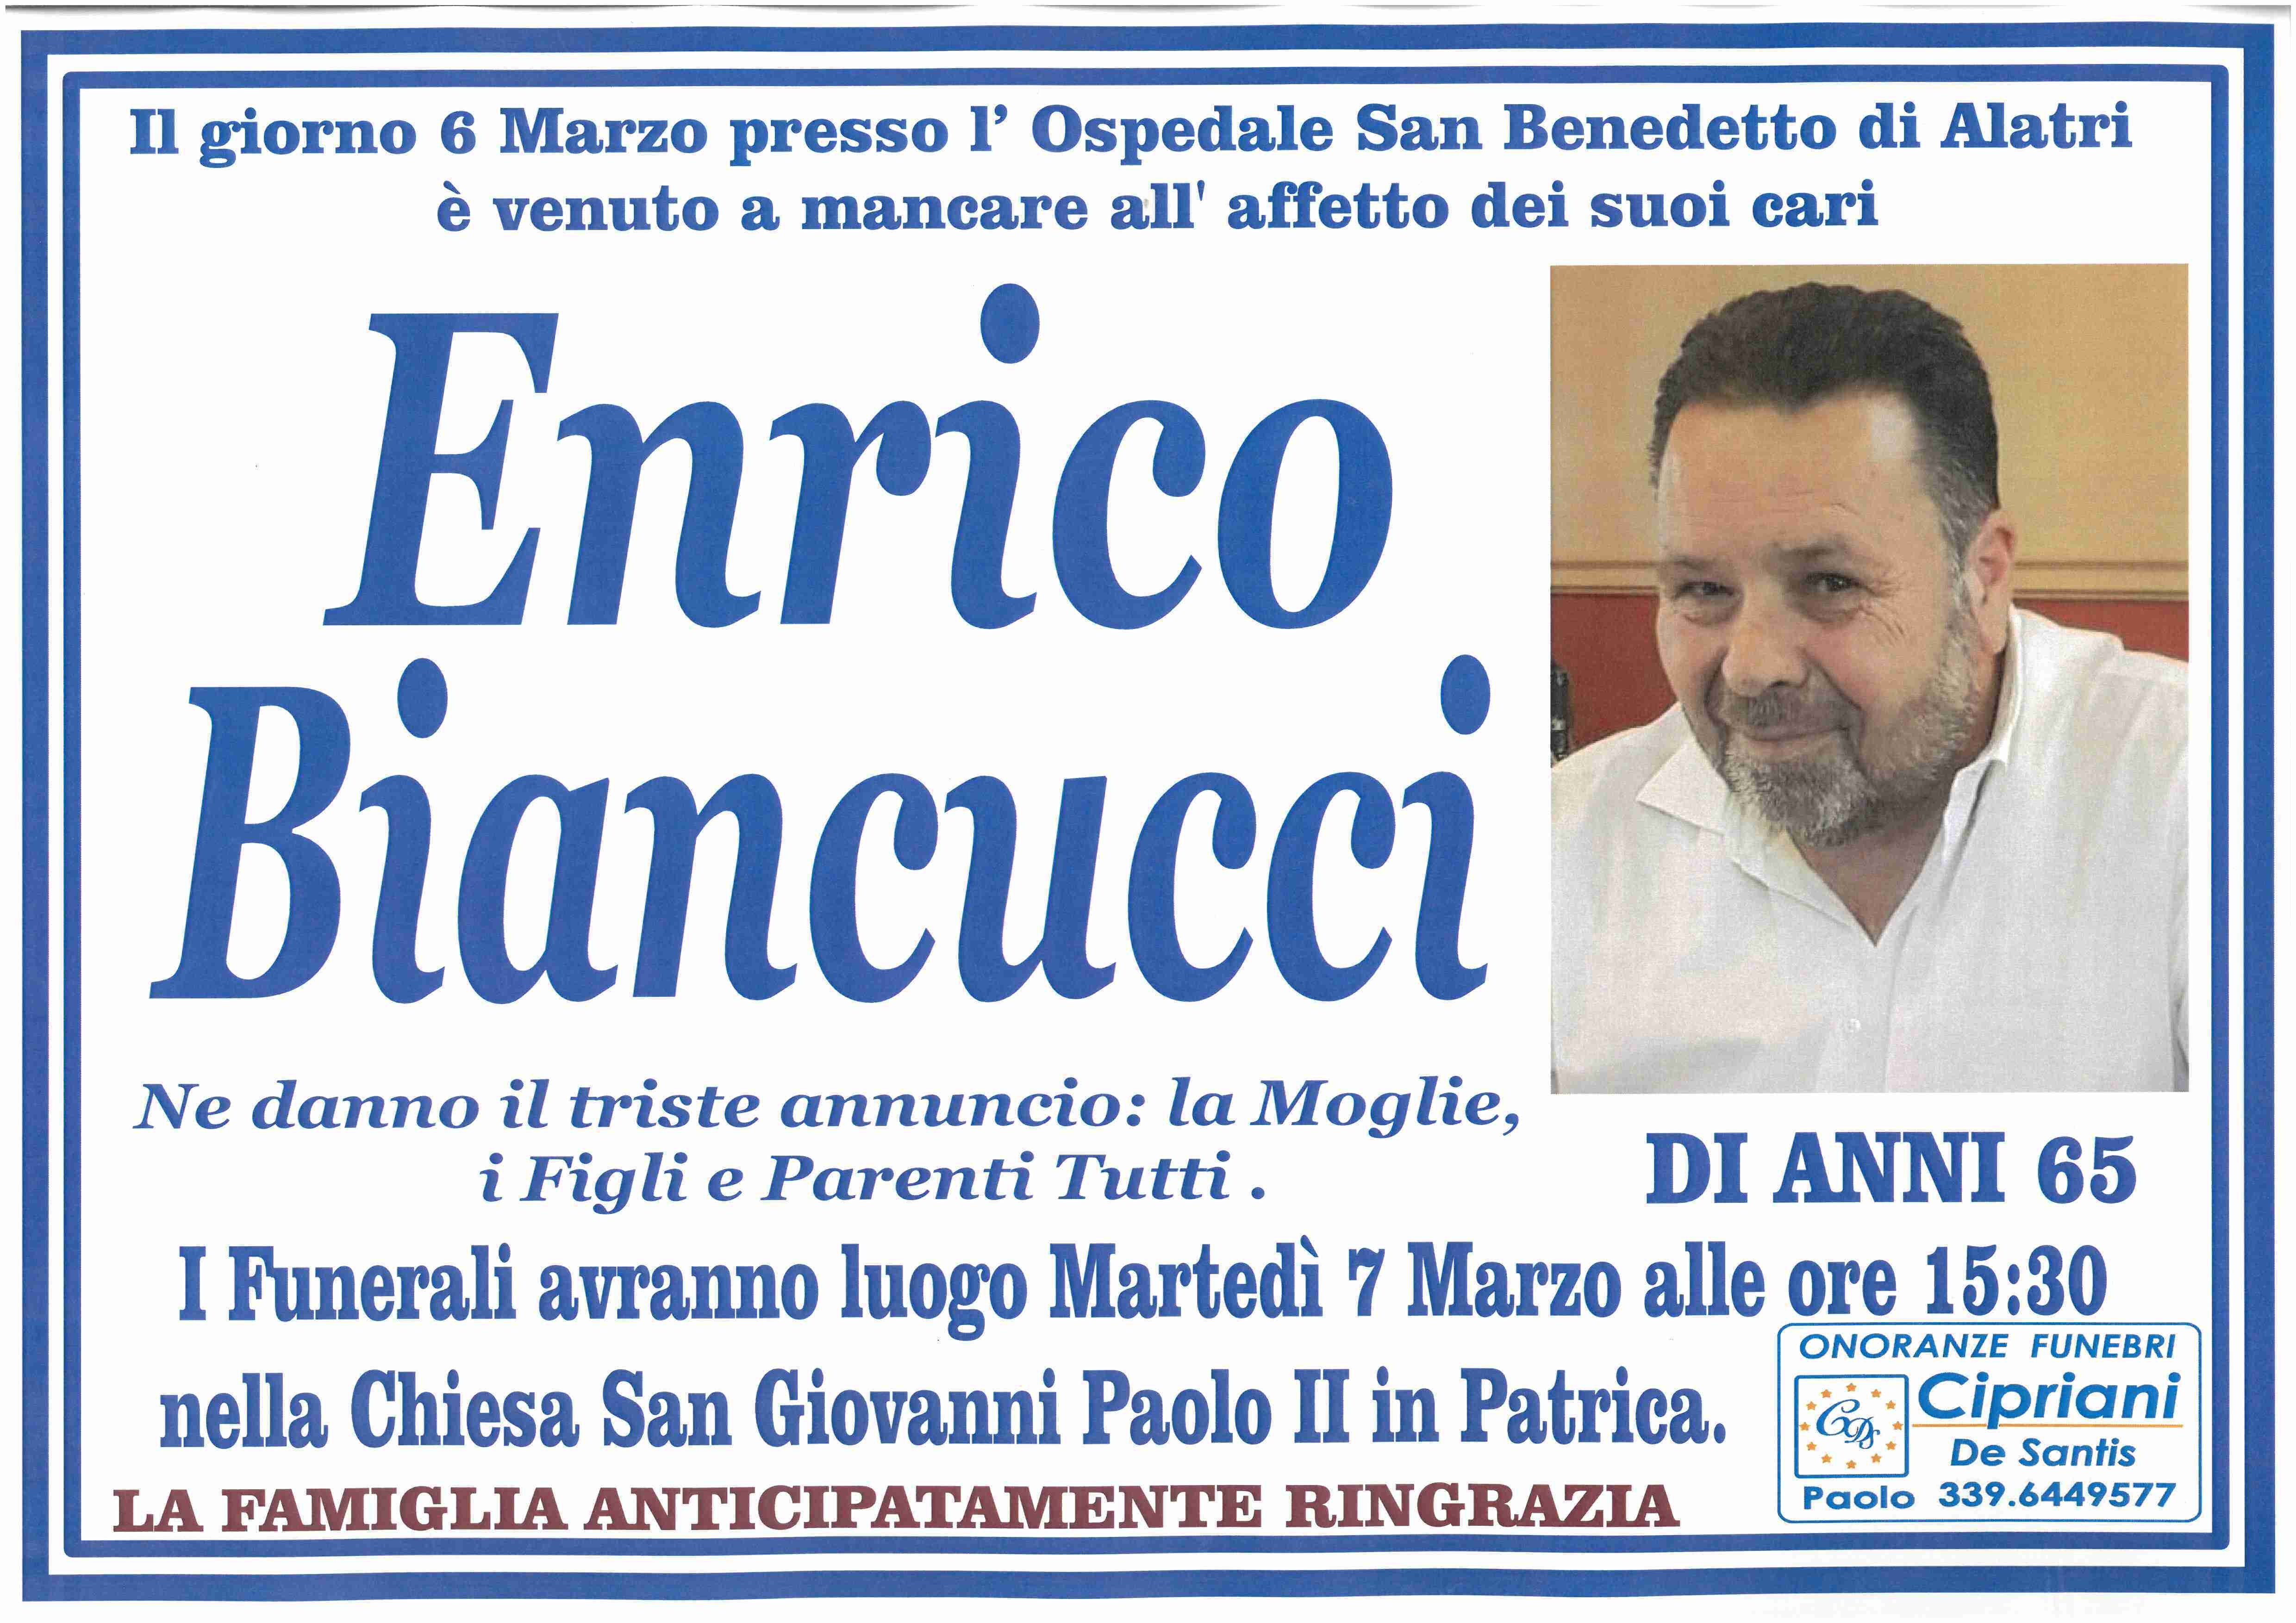 Enrico Biancucci